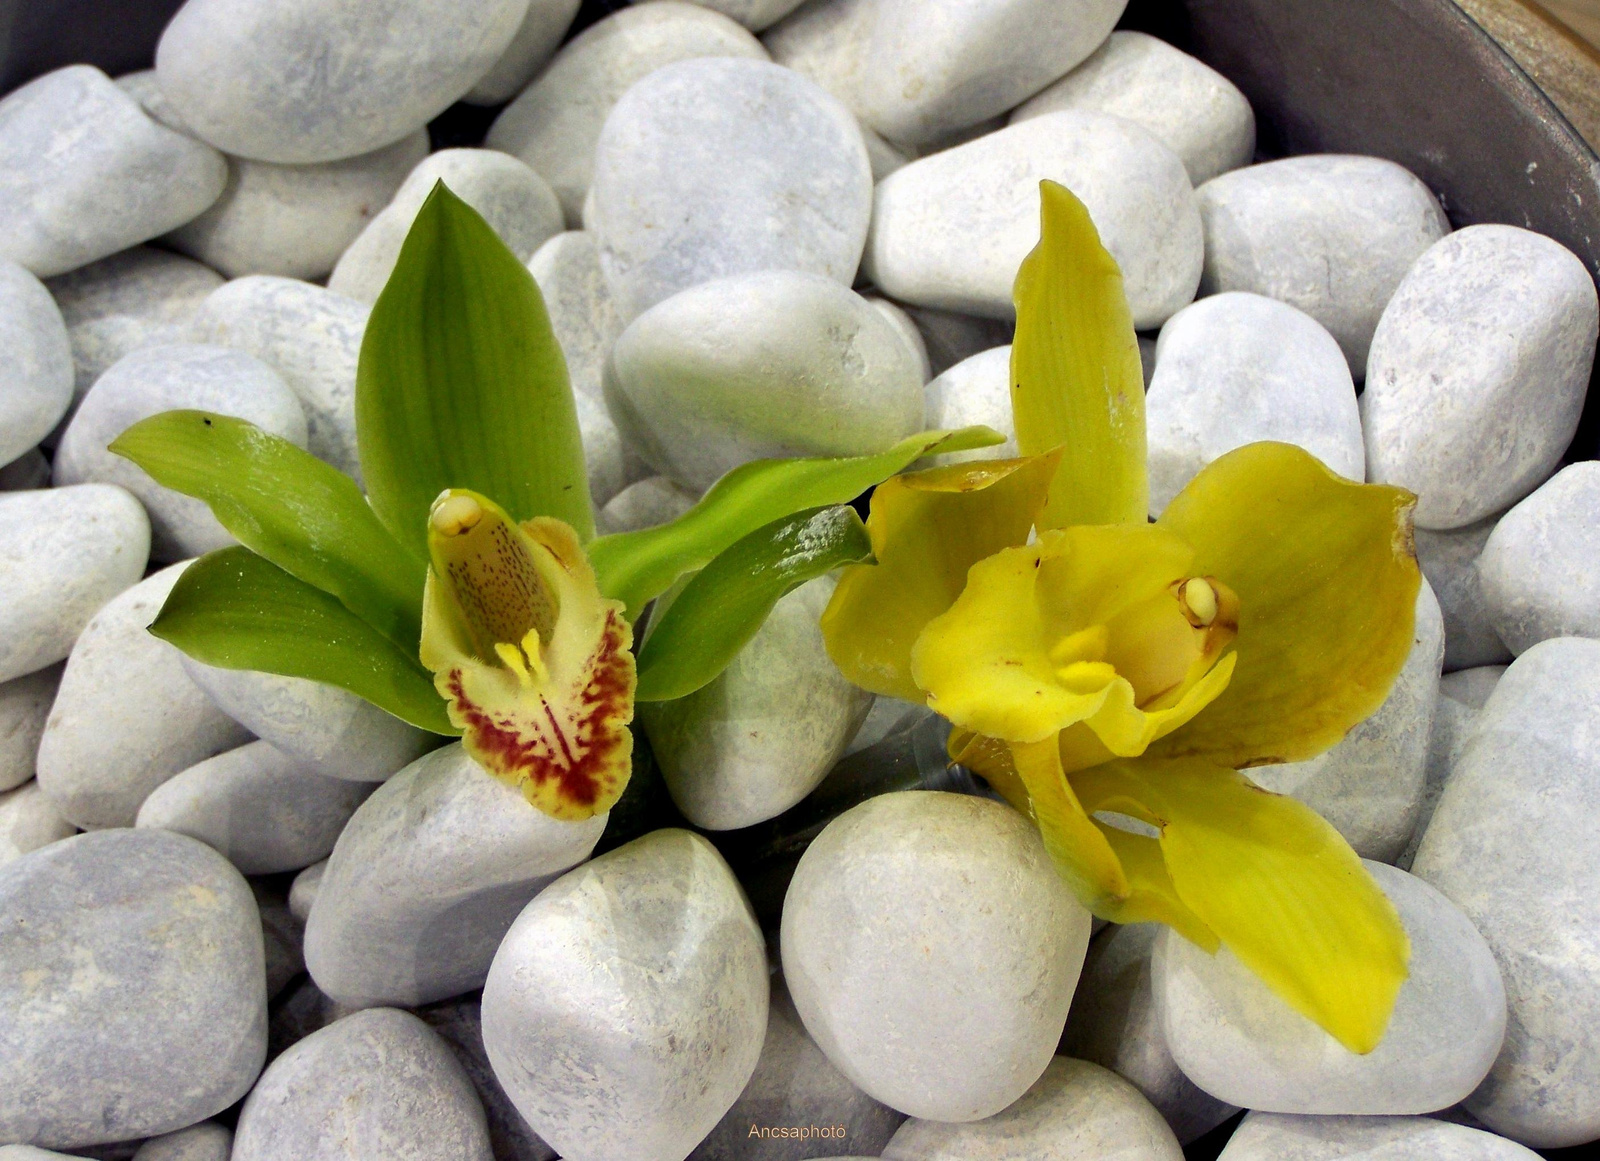 Gardenexpo Orchidea ünnep